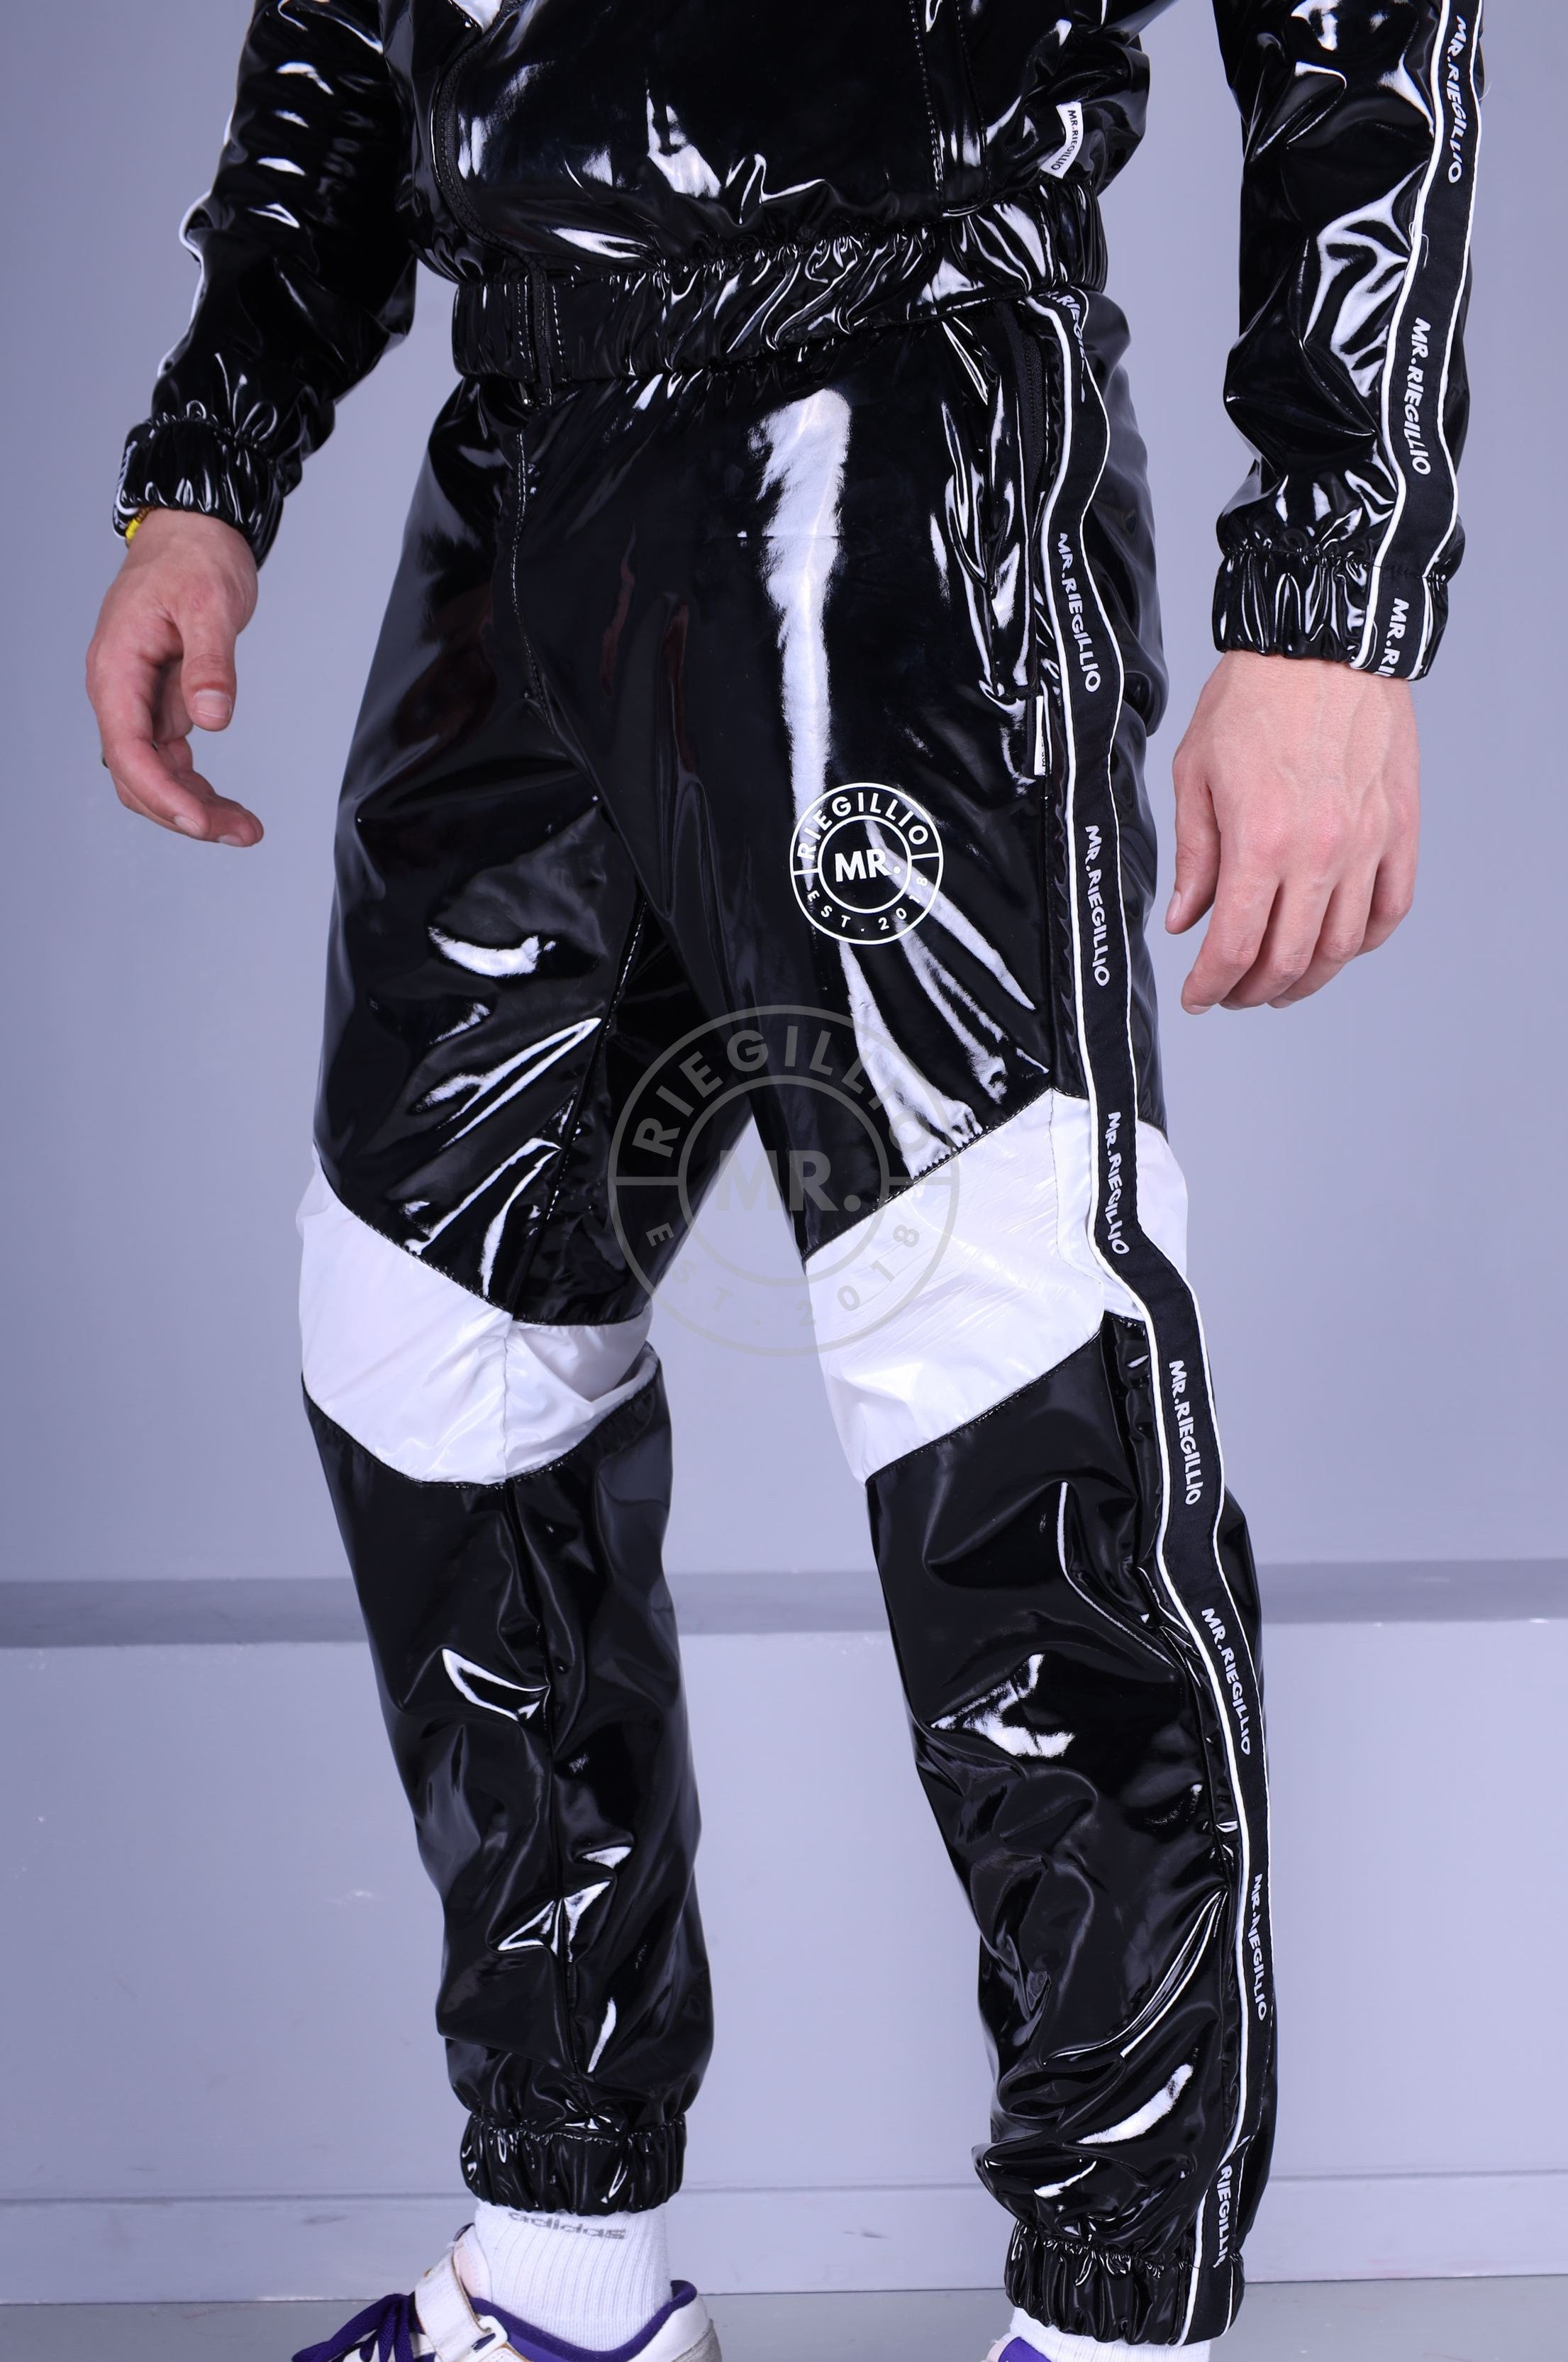 Full Black Shiny Nylon Tracksuit Pants by MR. Riegillio